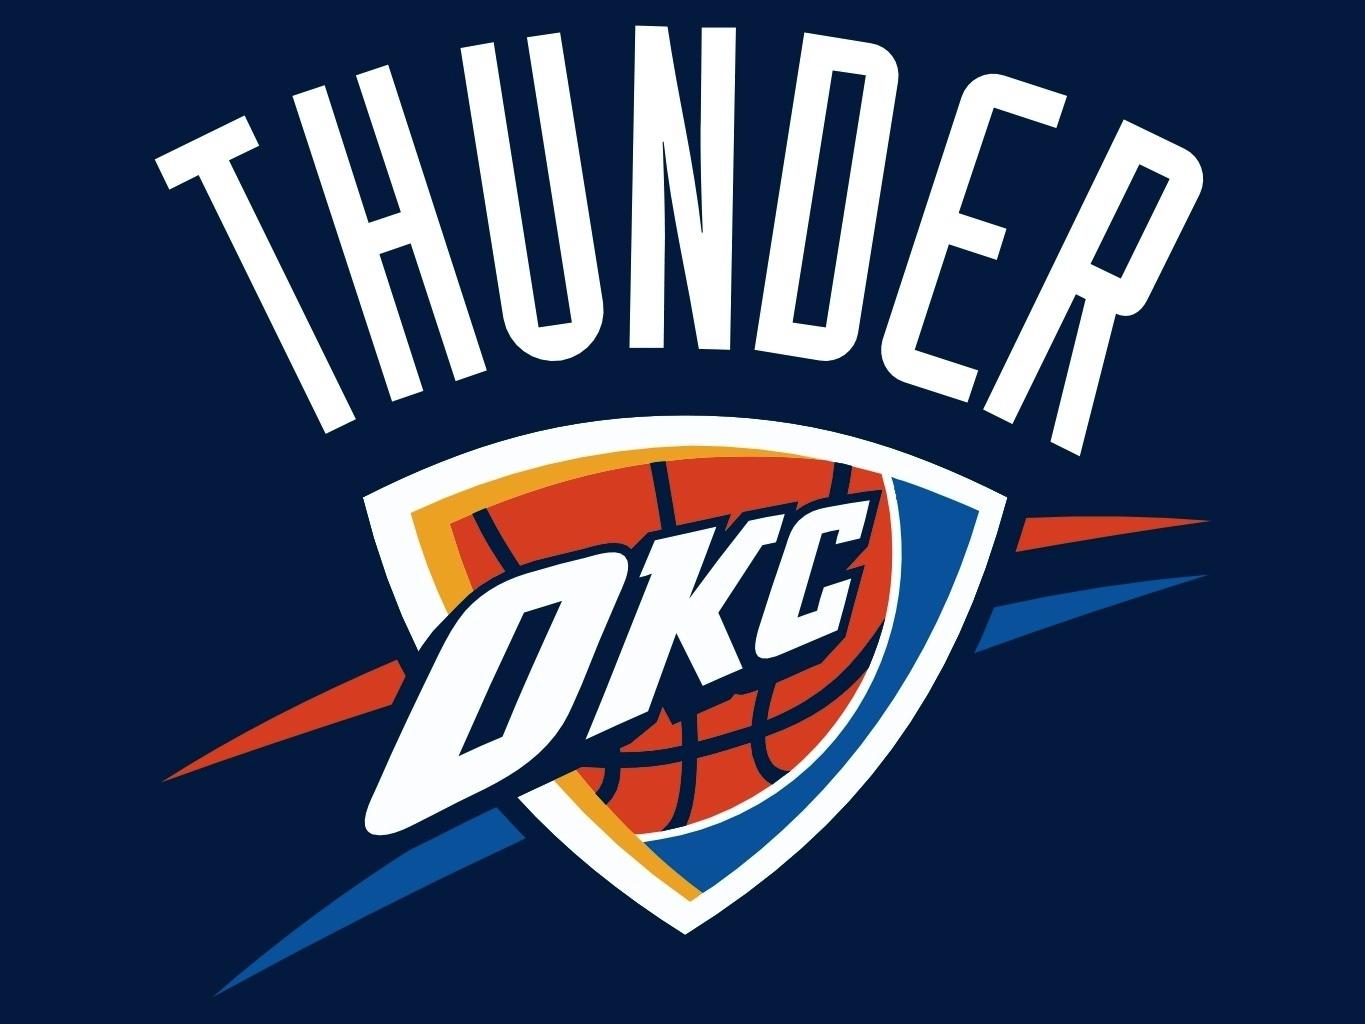 Oklahoma City Thunder at 1024 x 1024 iPad size wallpapers HD quality